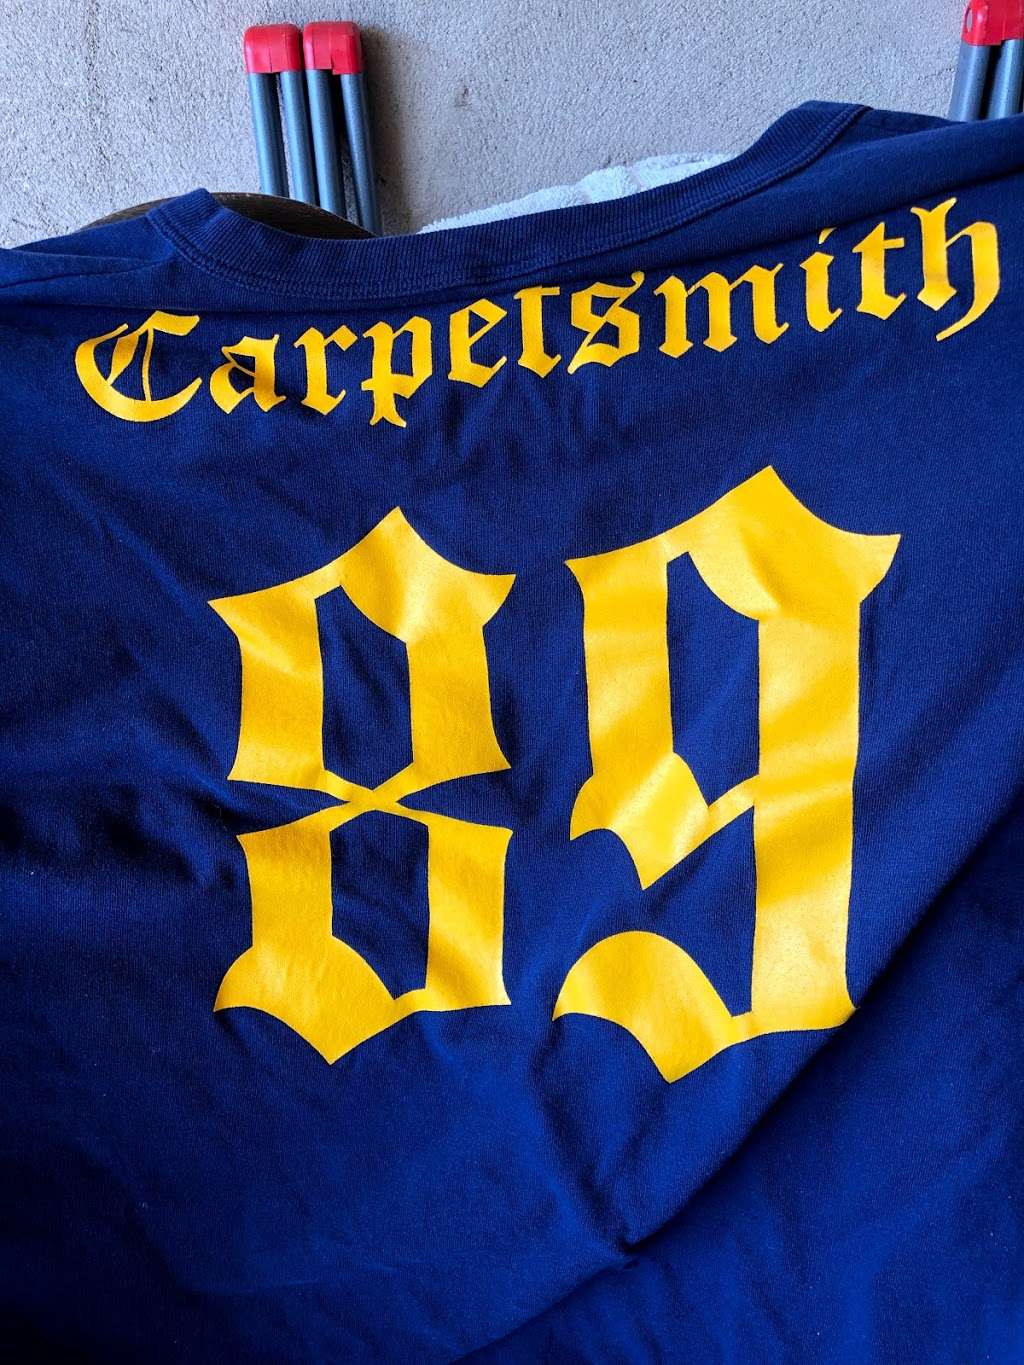 Carpetsmith Inc. | 607 County Line Rd, Huntingdon Valley, PA 19006, USA | Phone: (215) 338-2886